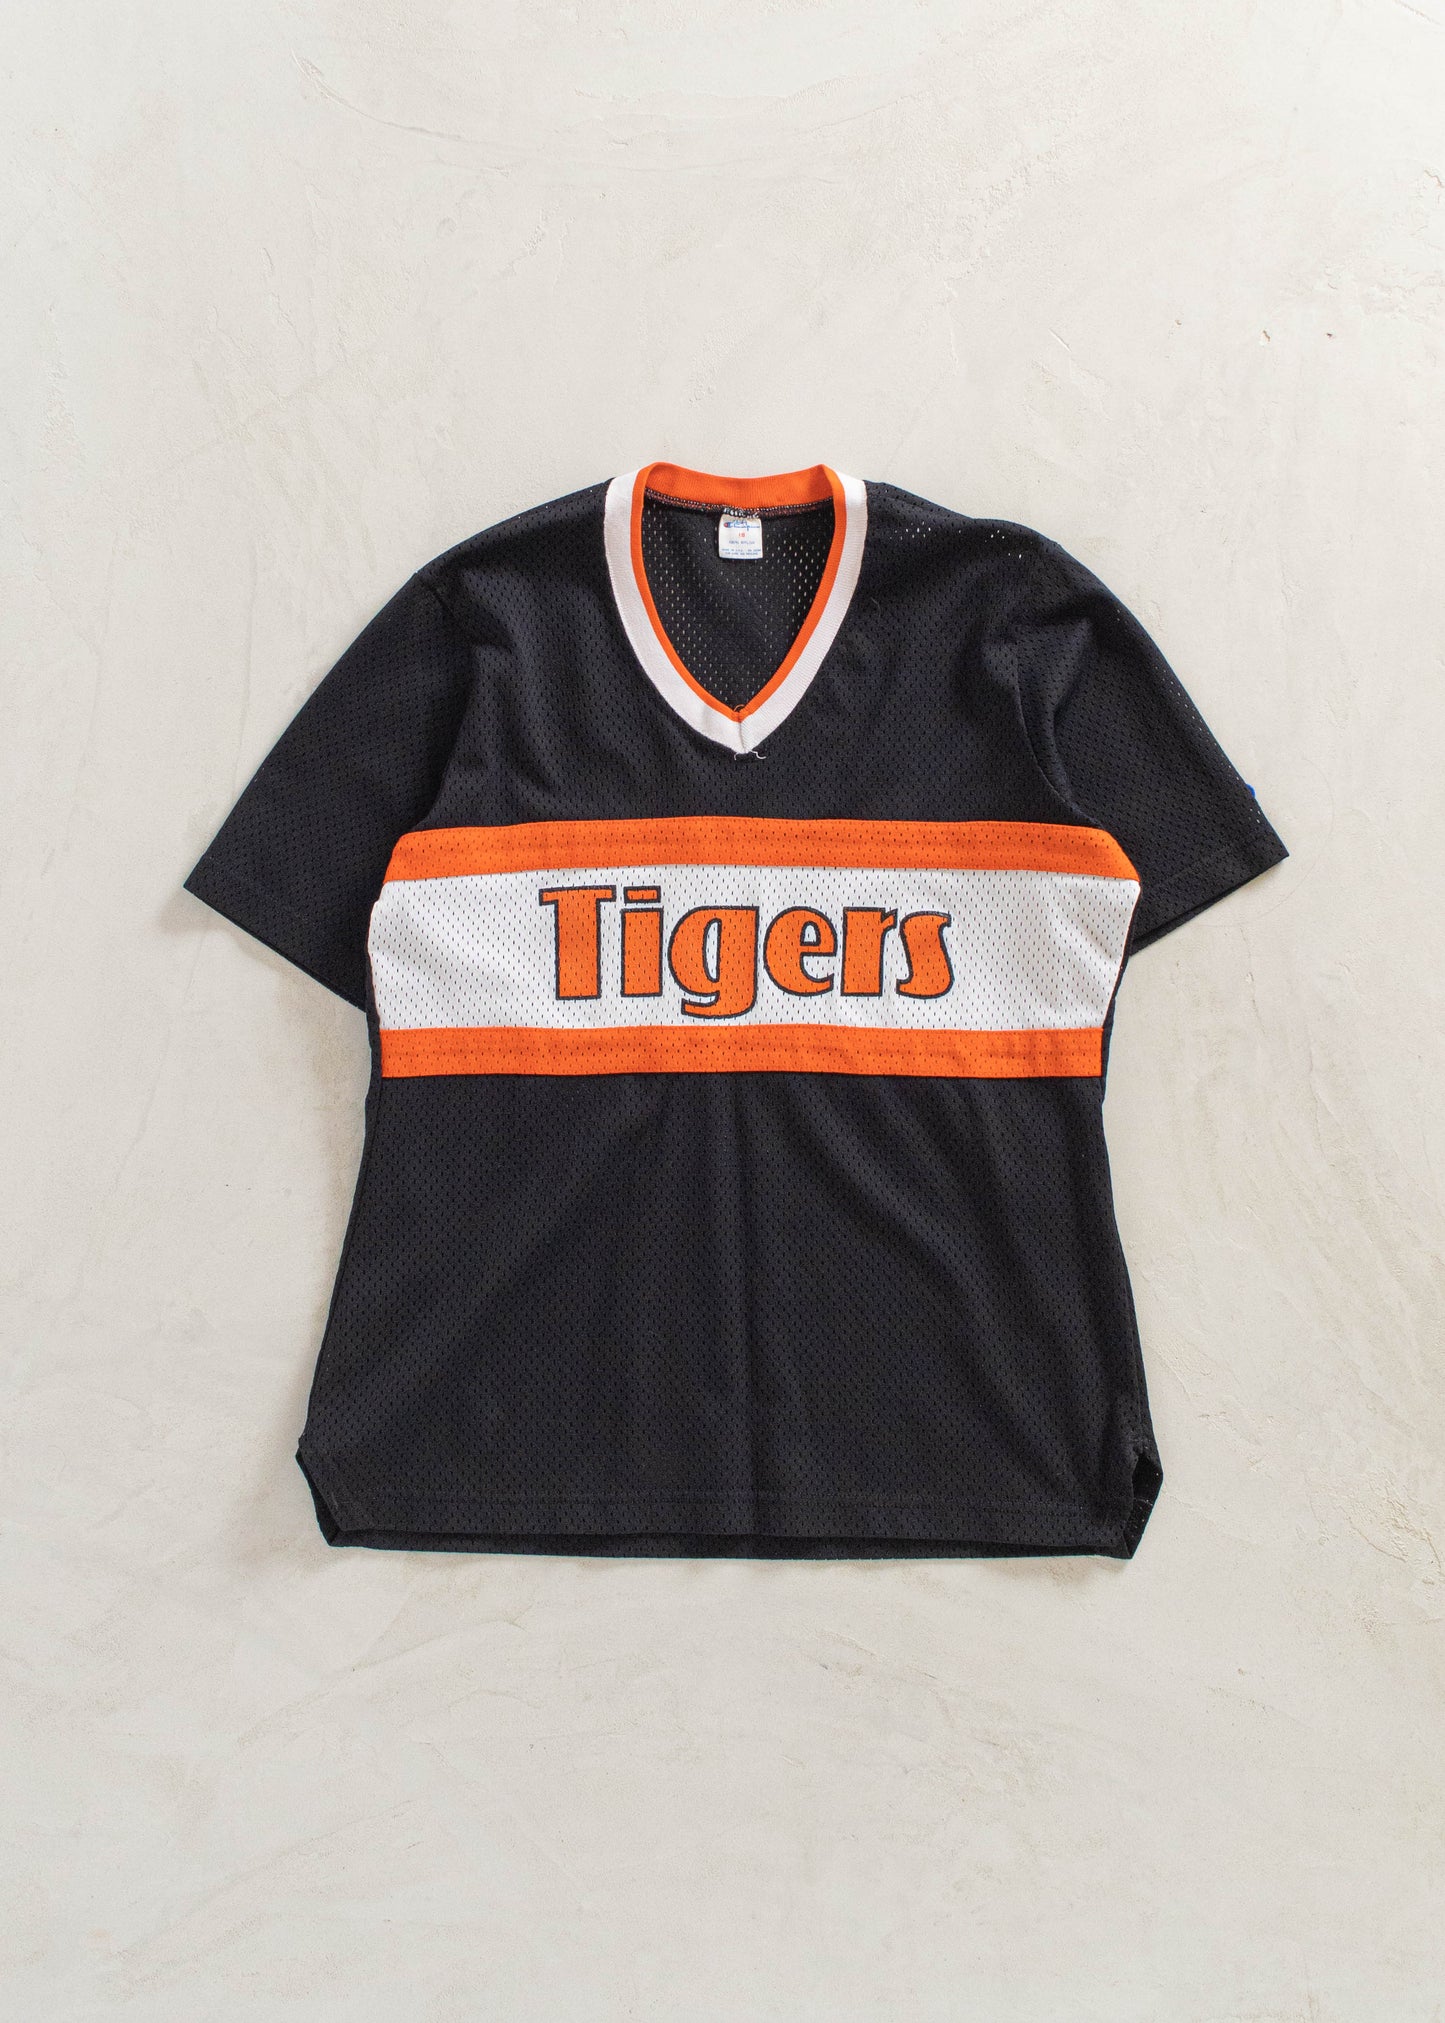 Vintage 1980s Champion Tigers Mesh Sport Jersey Size M/L